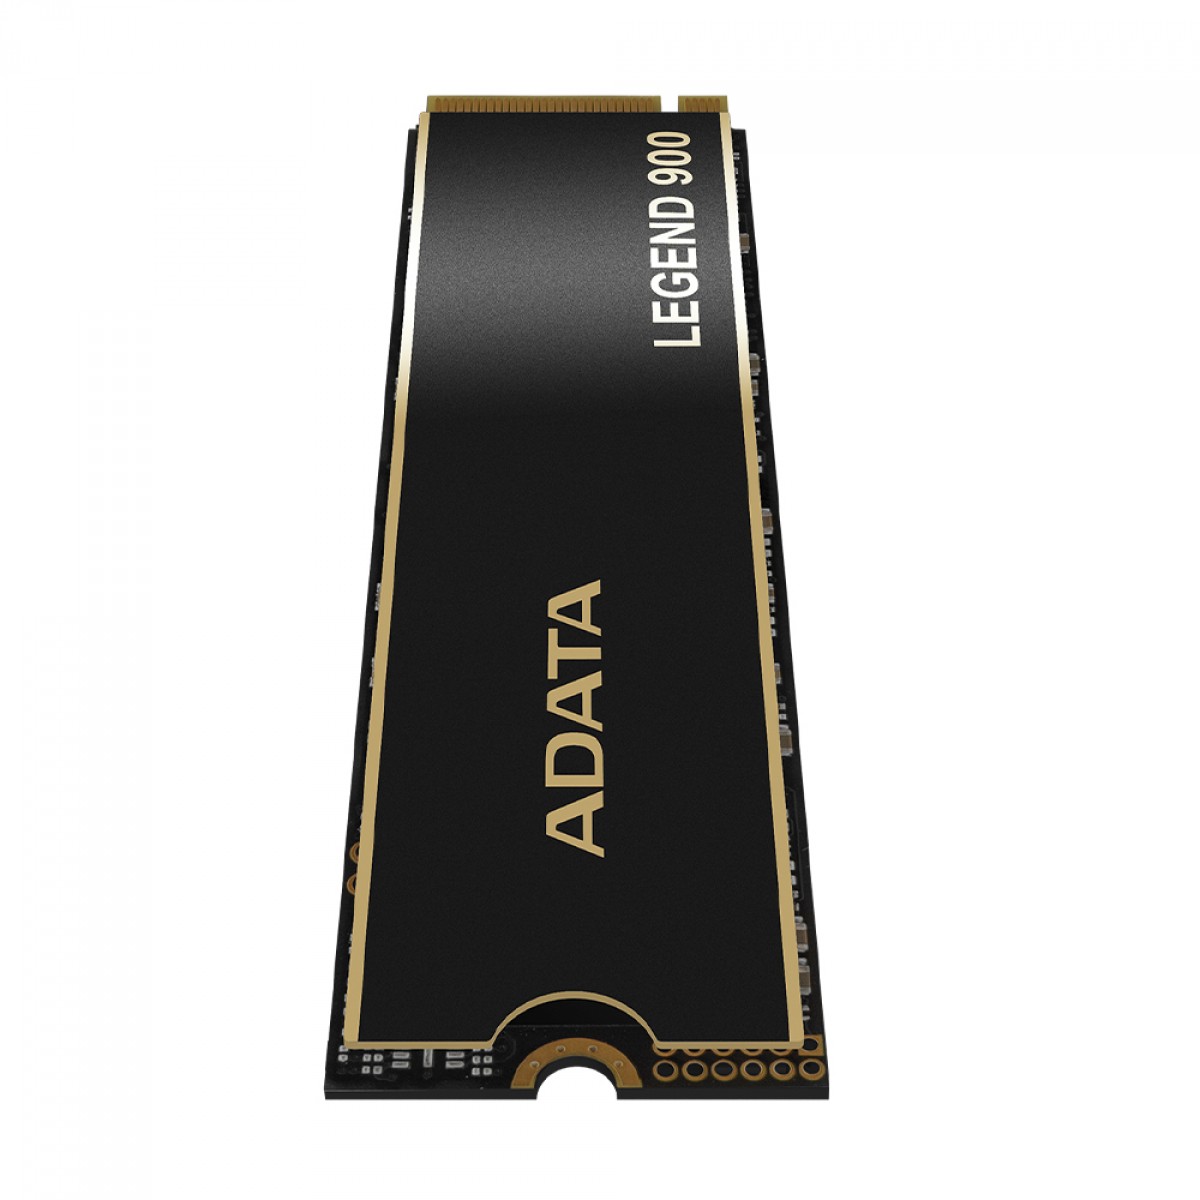 SSD Adata Legend 900, 512GB, M.2 2280 NVMe, Leitura 6200MBs e Gravação 2300MBs, SLEG-900-512GCS